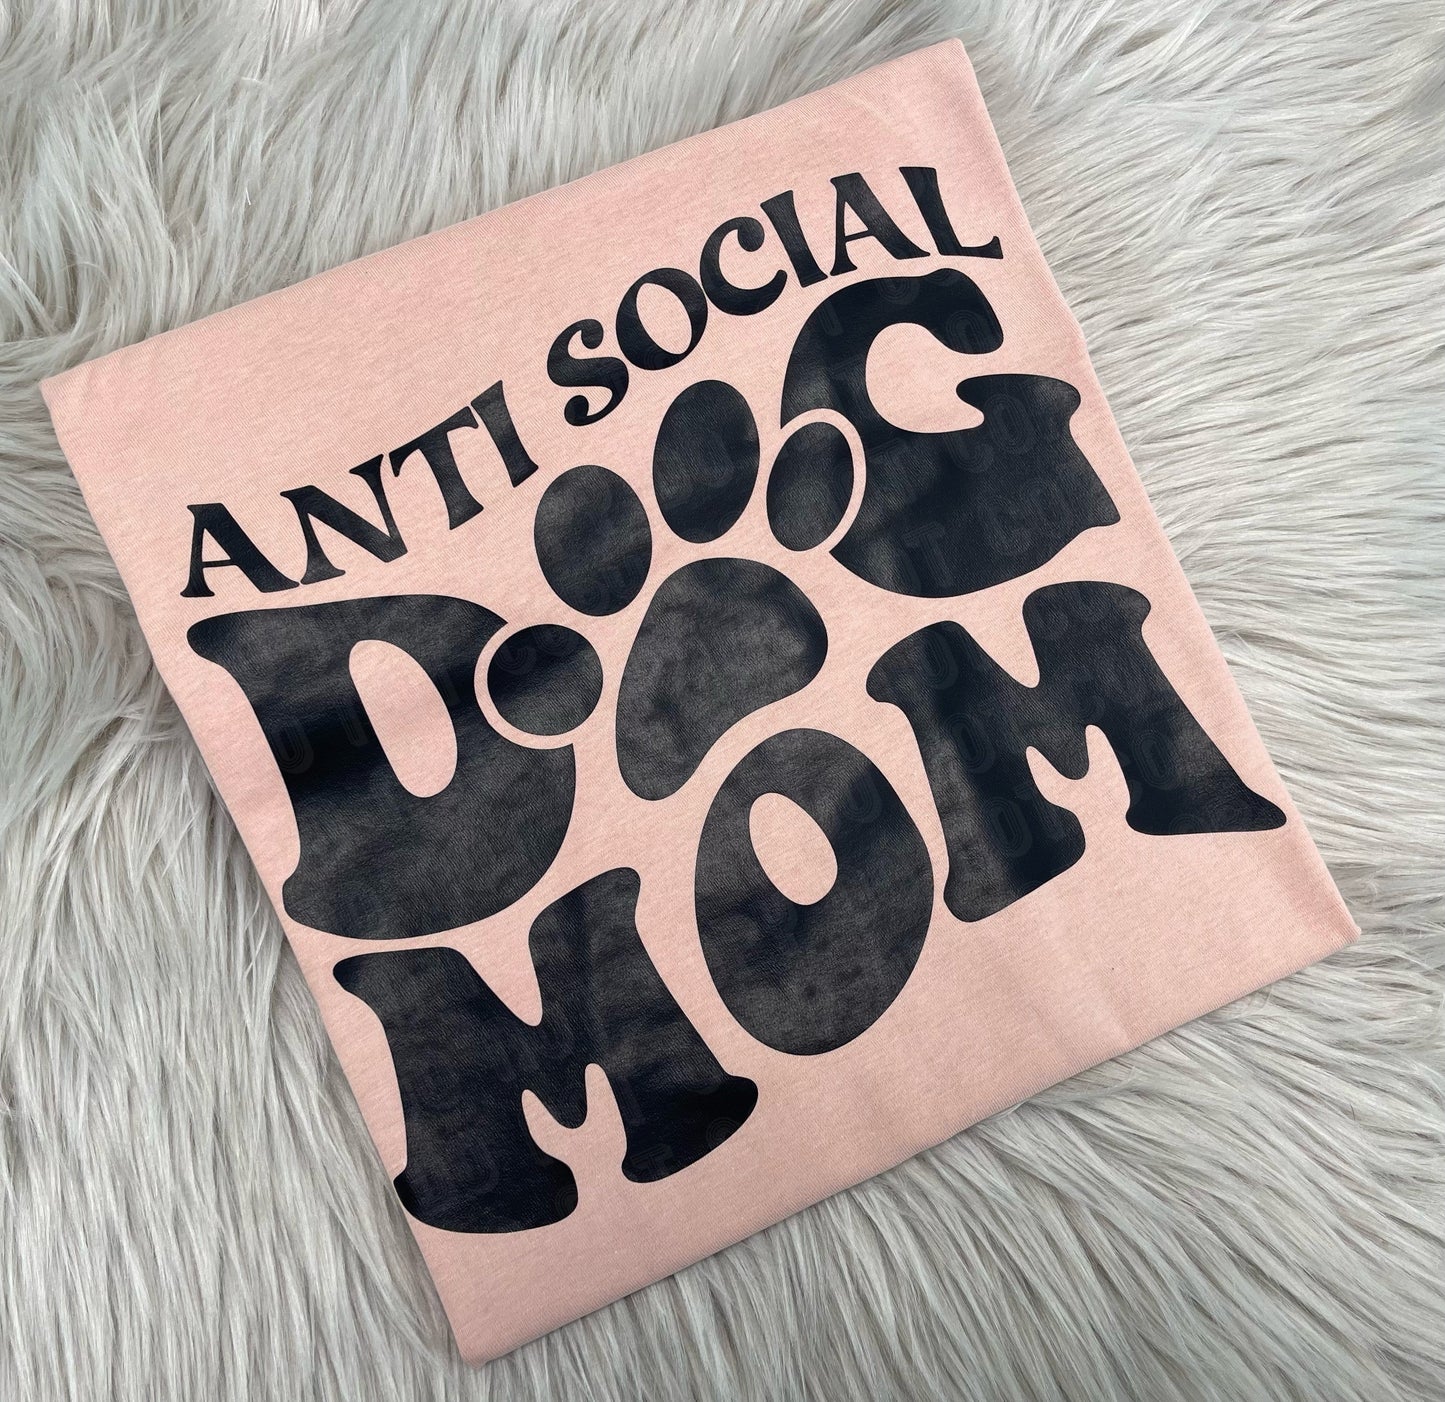 Anti Social Dog Mom